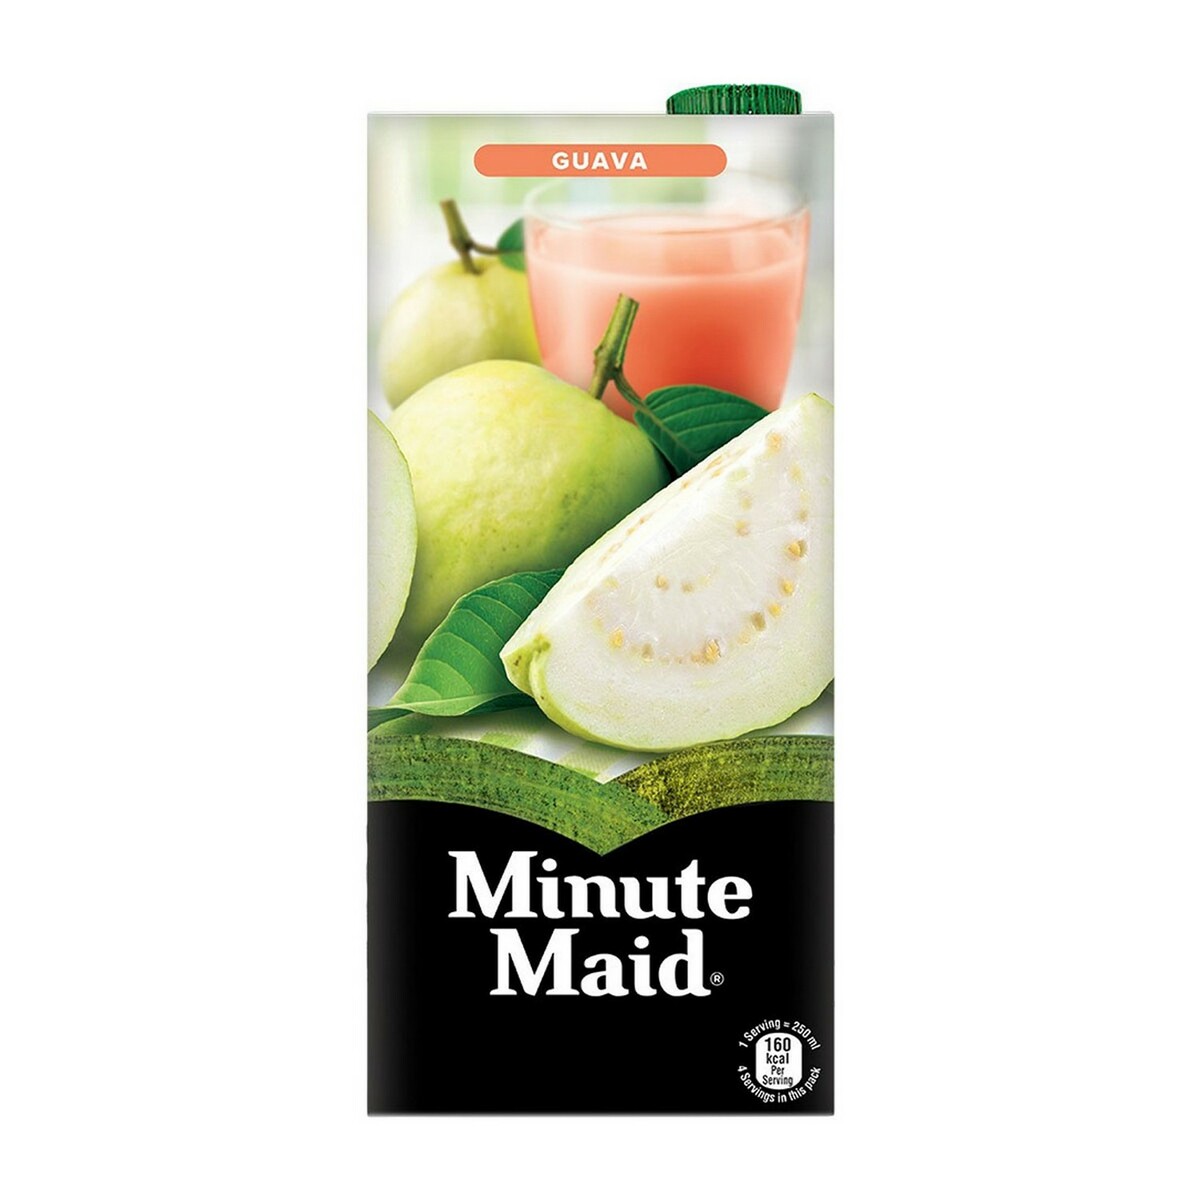 Minute Maid Juice Guava Tetra 1Litre